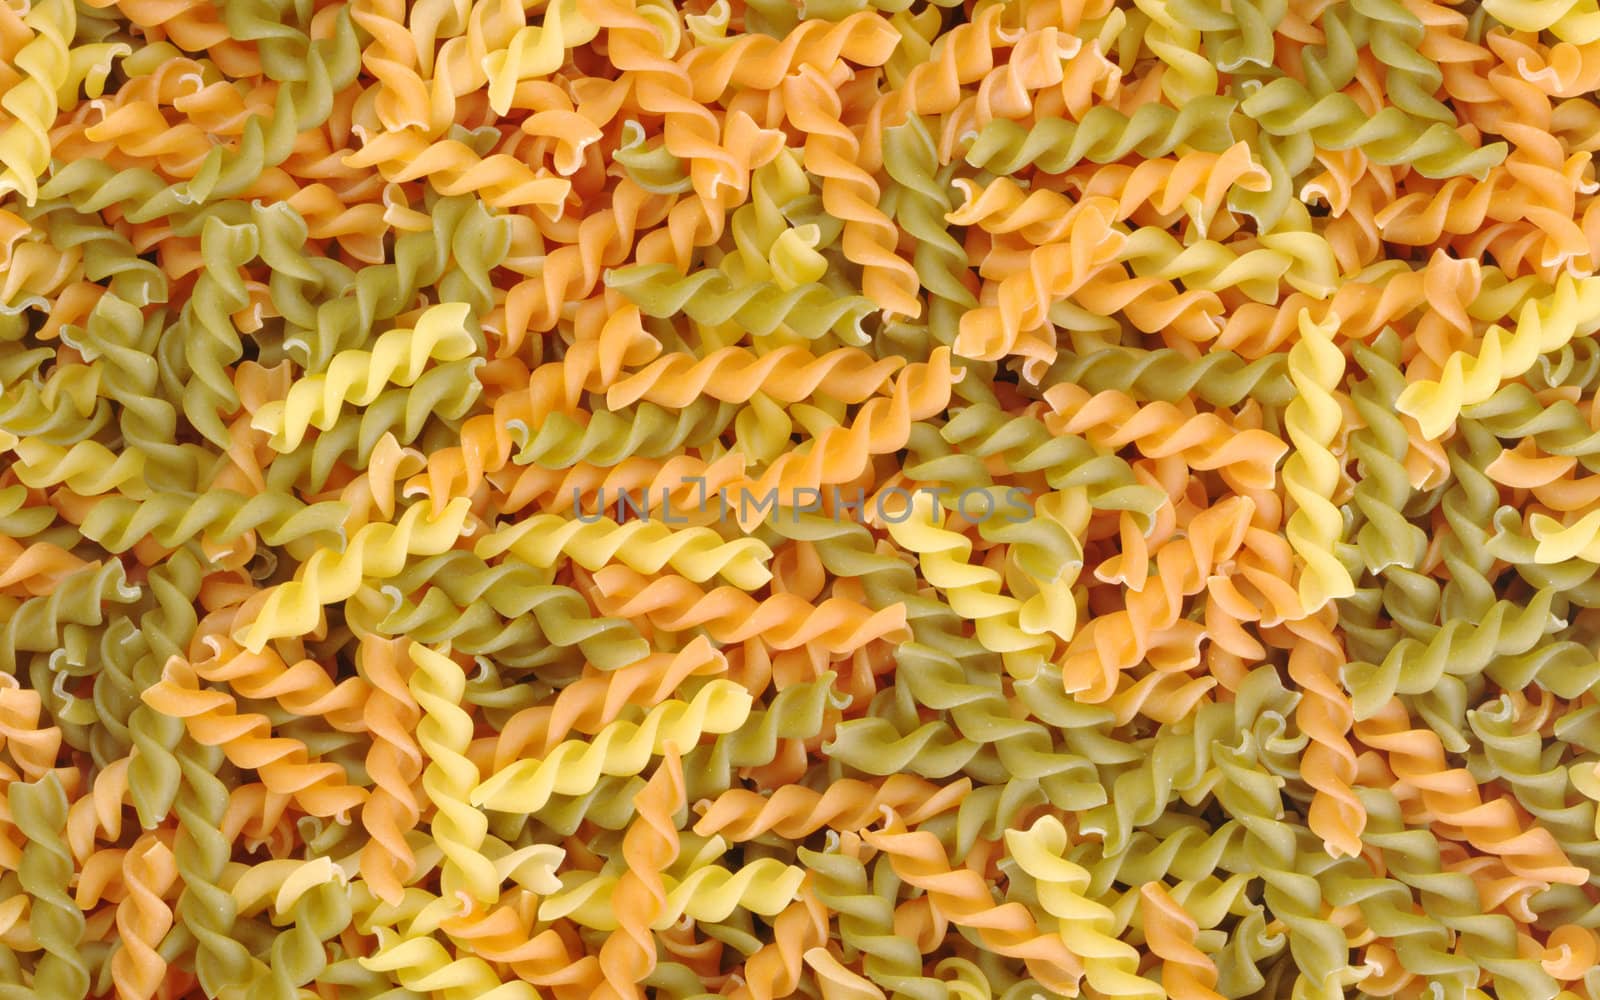 Uncooked Pasta (Fusilli) by sven